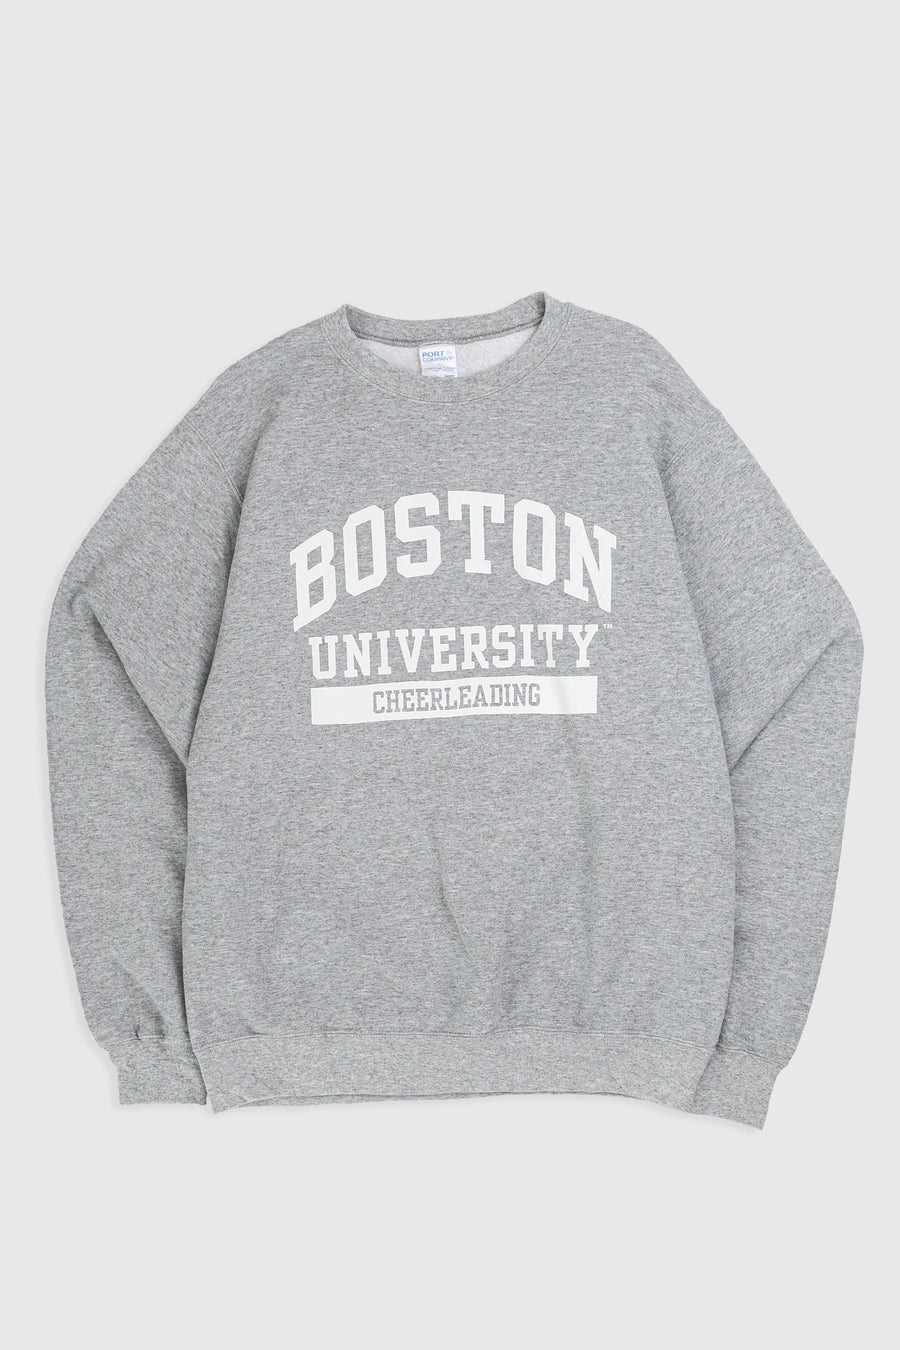 Vintage Boston University Sweatshirt